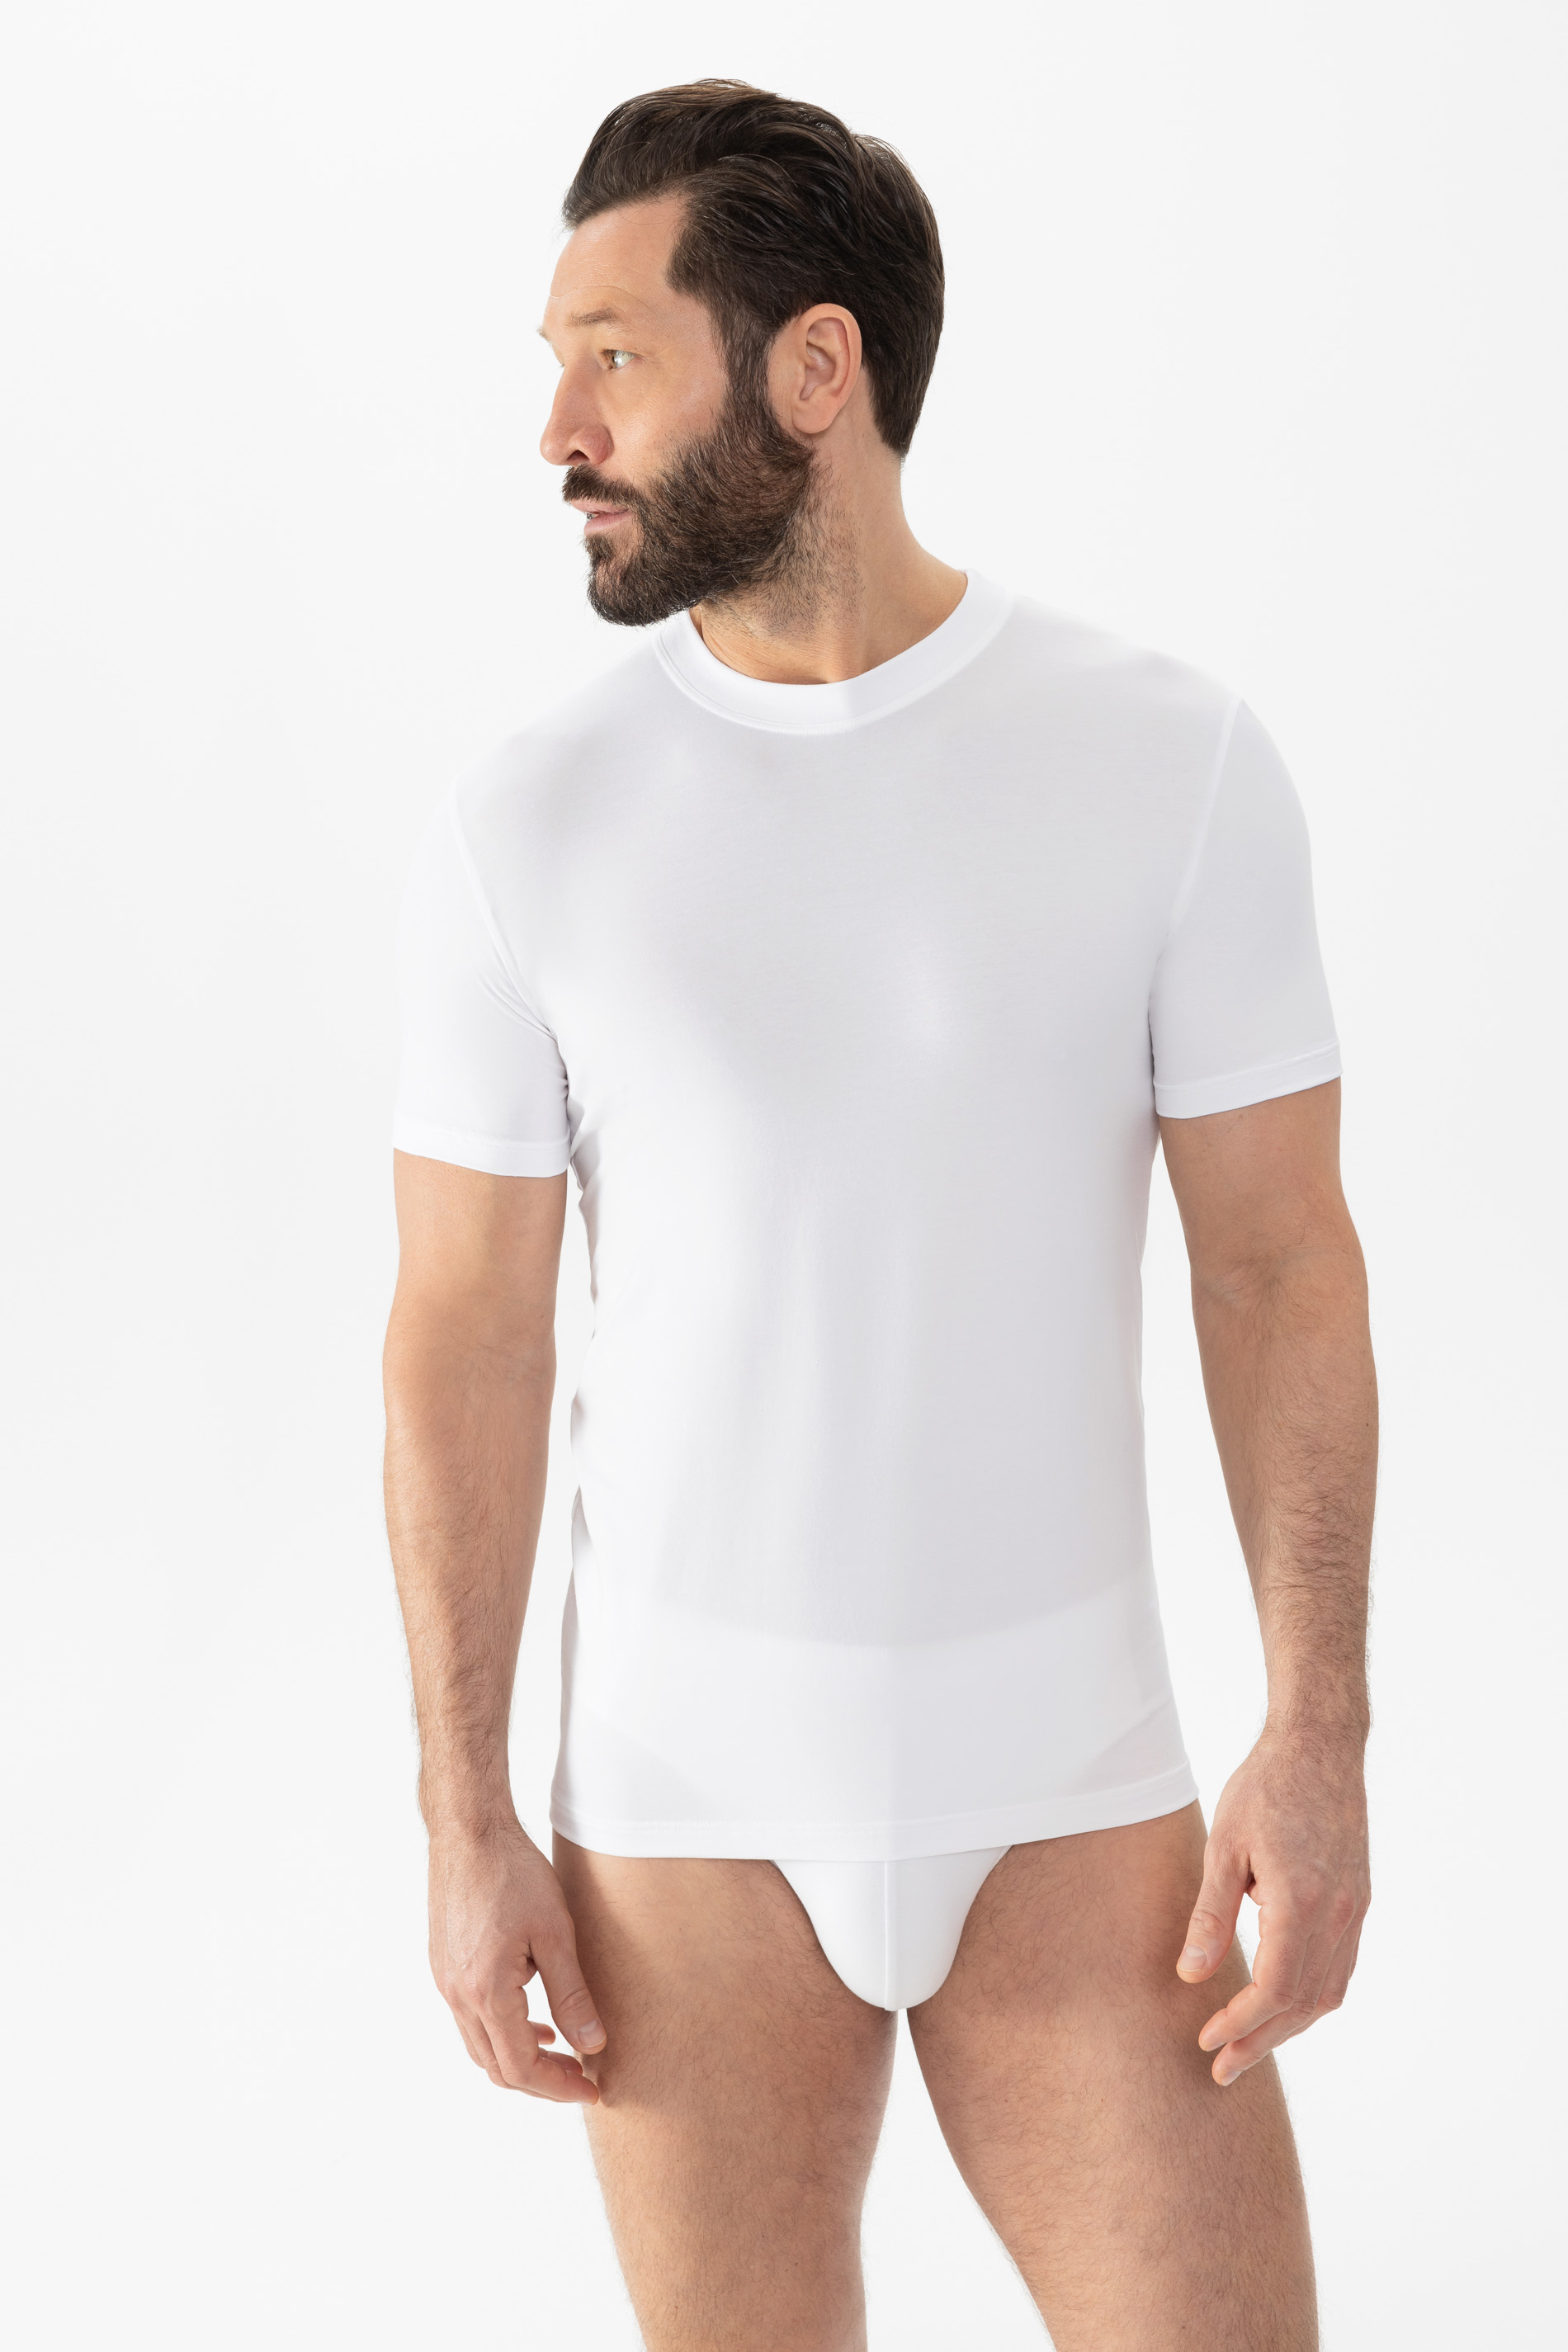 Shirt Wit Serie Dry Cotton Vooraanzicht | mey®